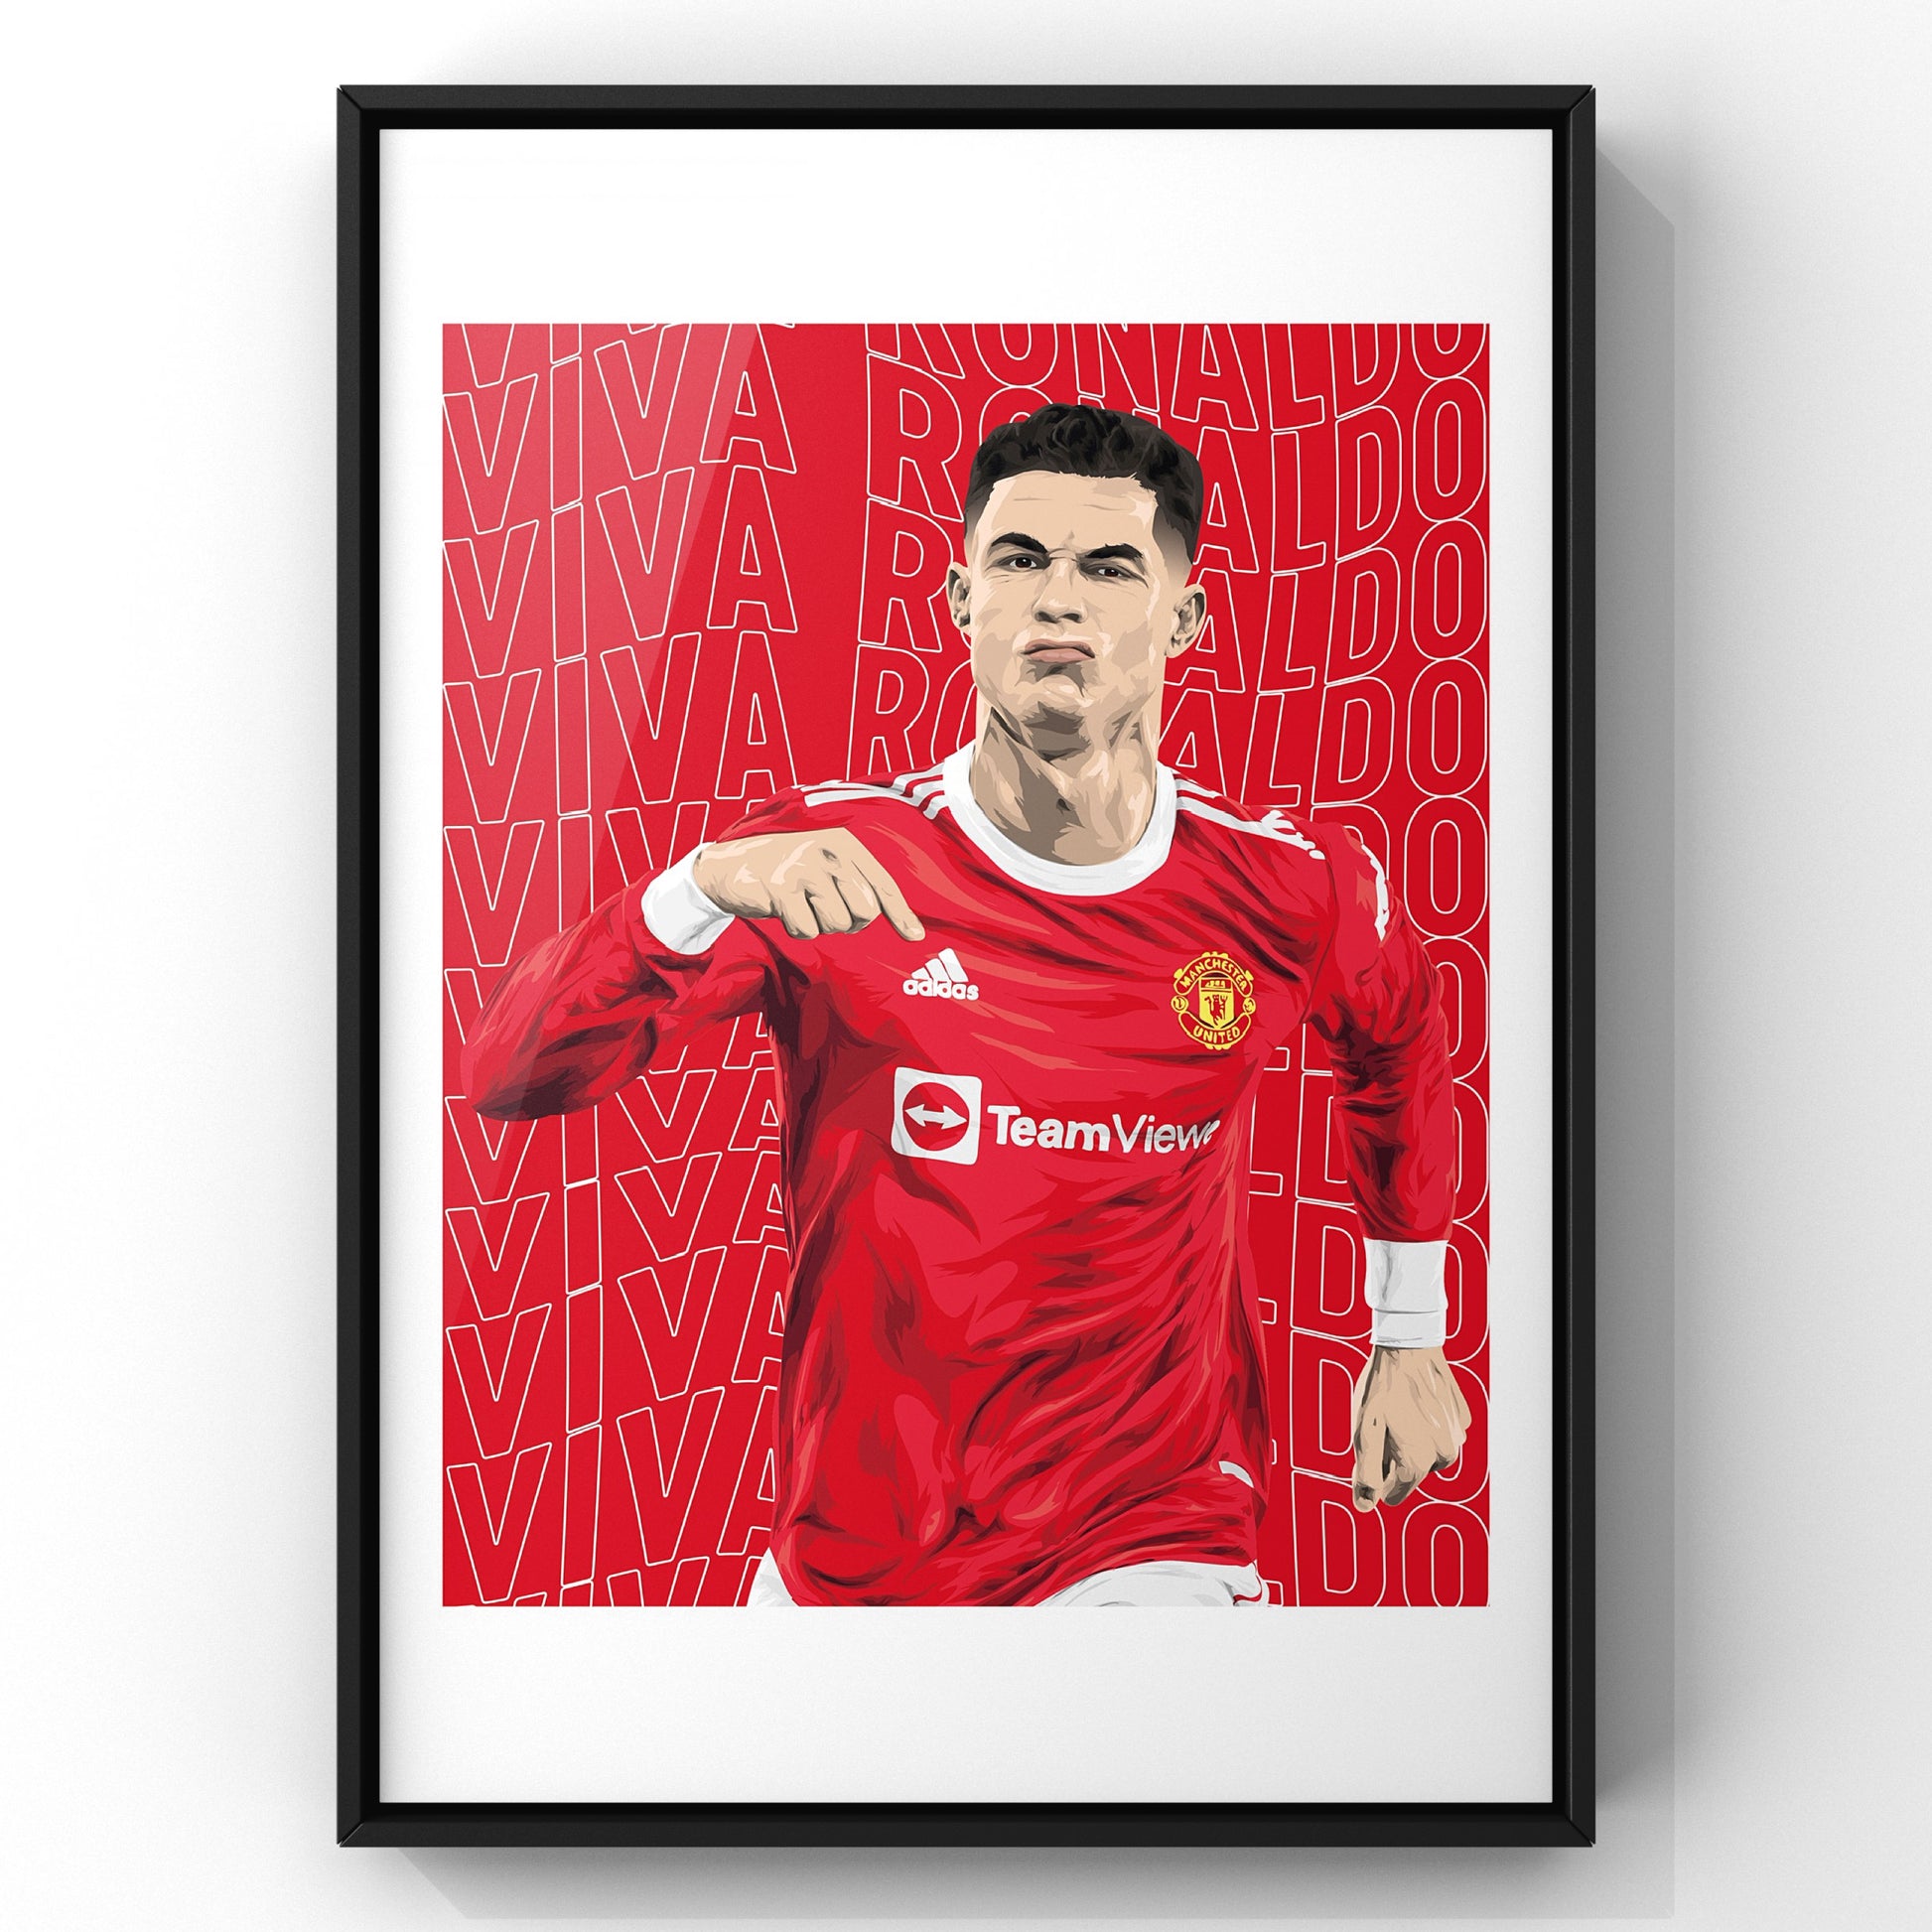 Ronaldo VIVA Print – hazdoeswhatever's